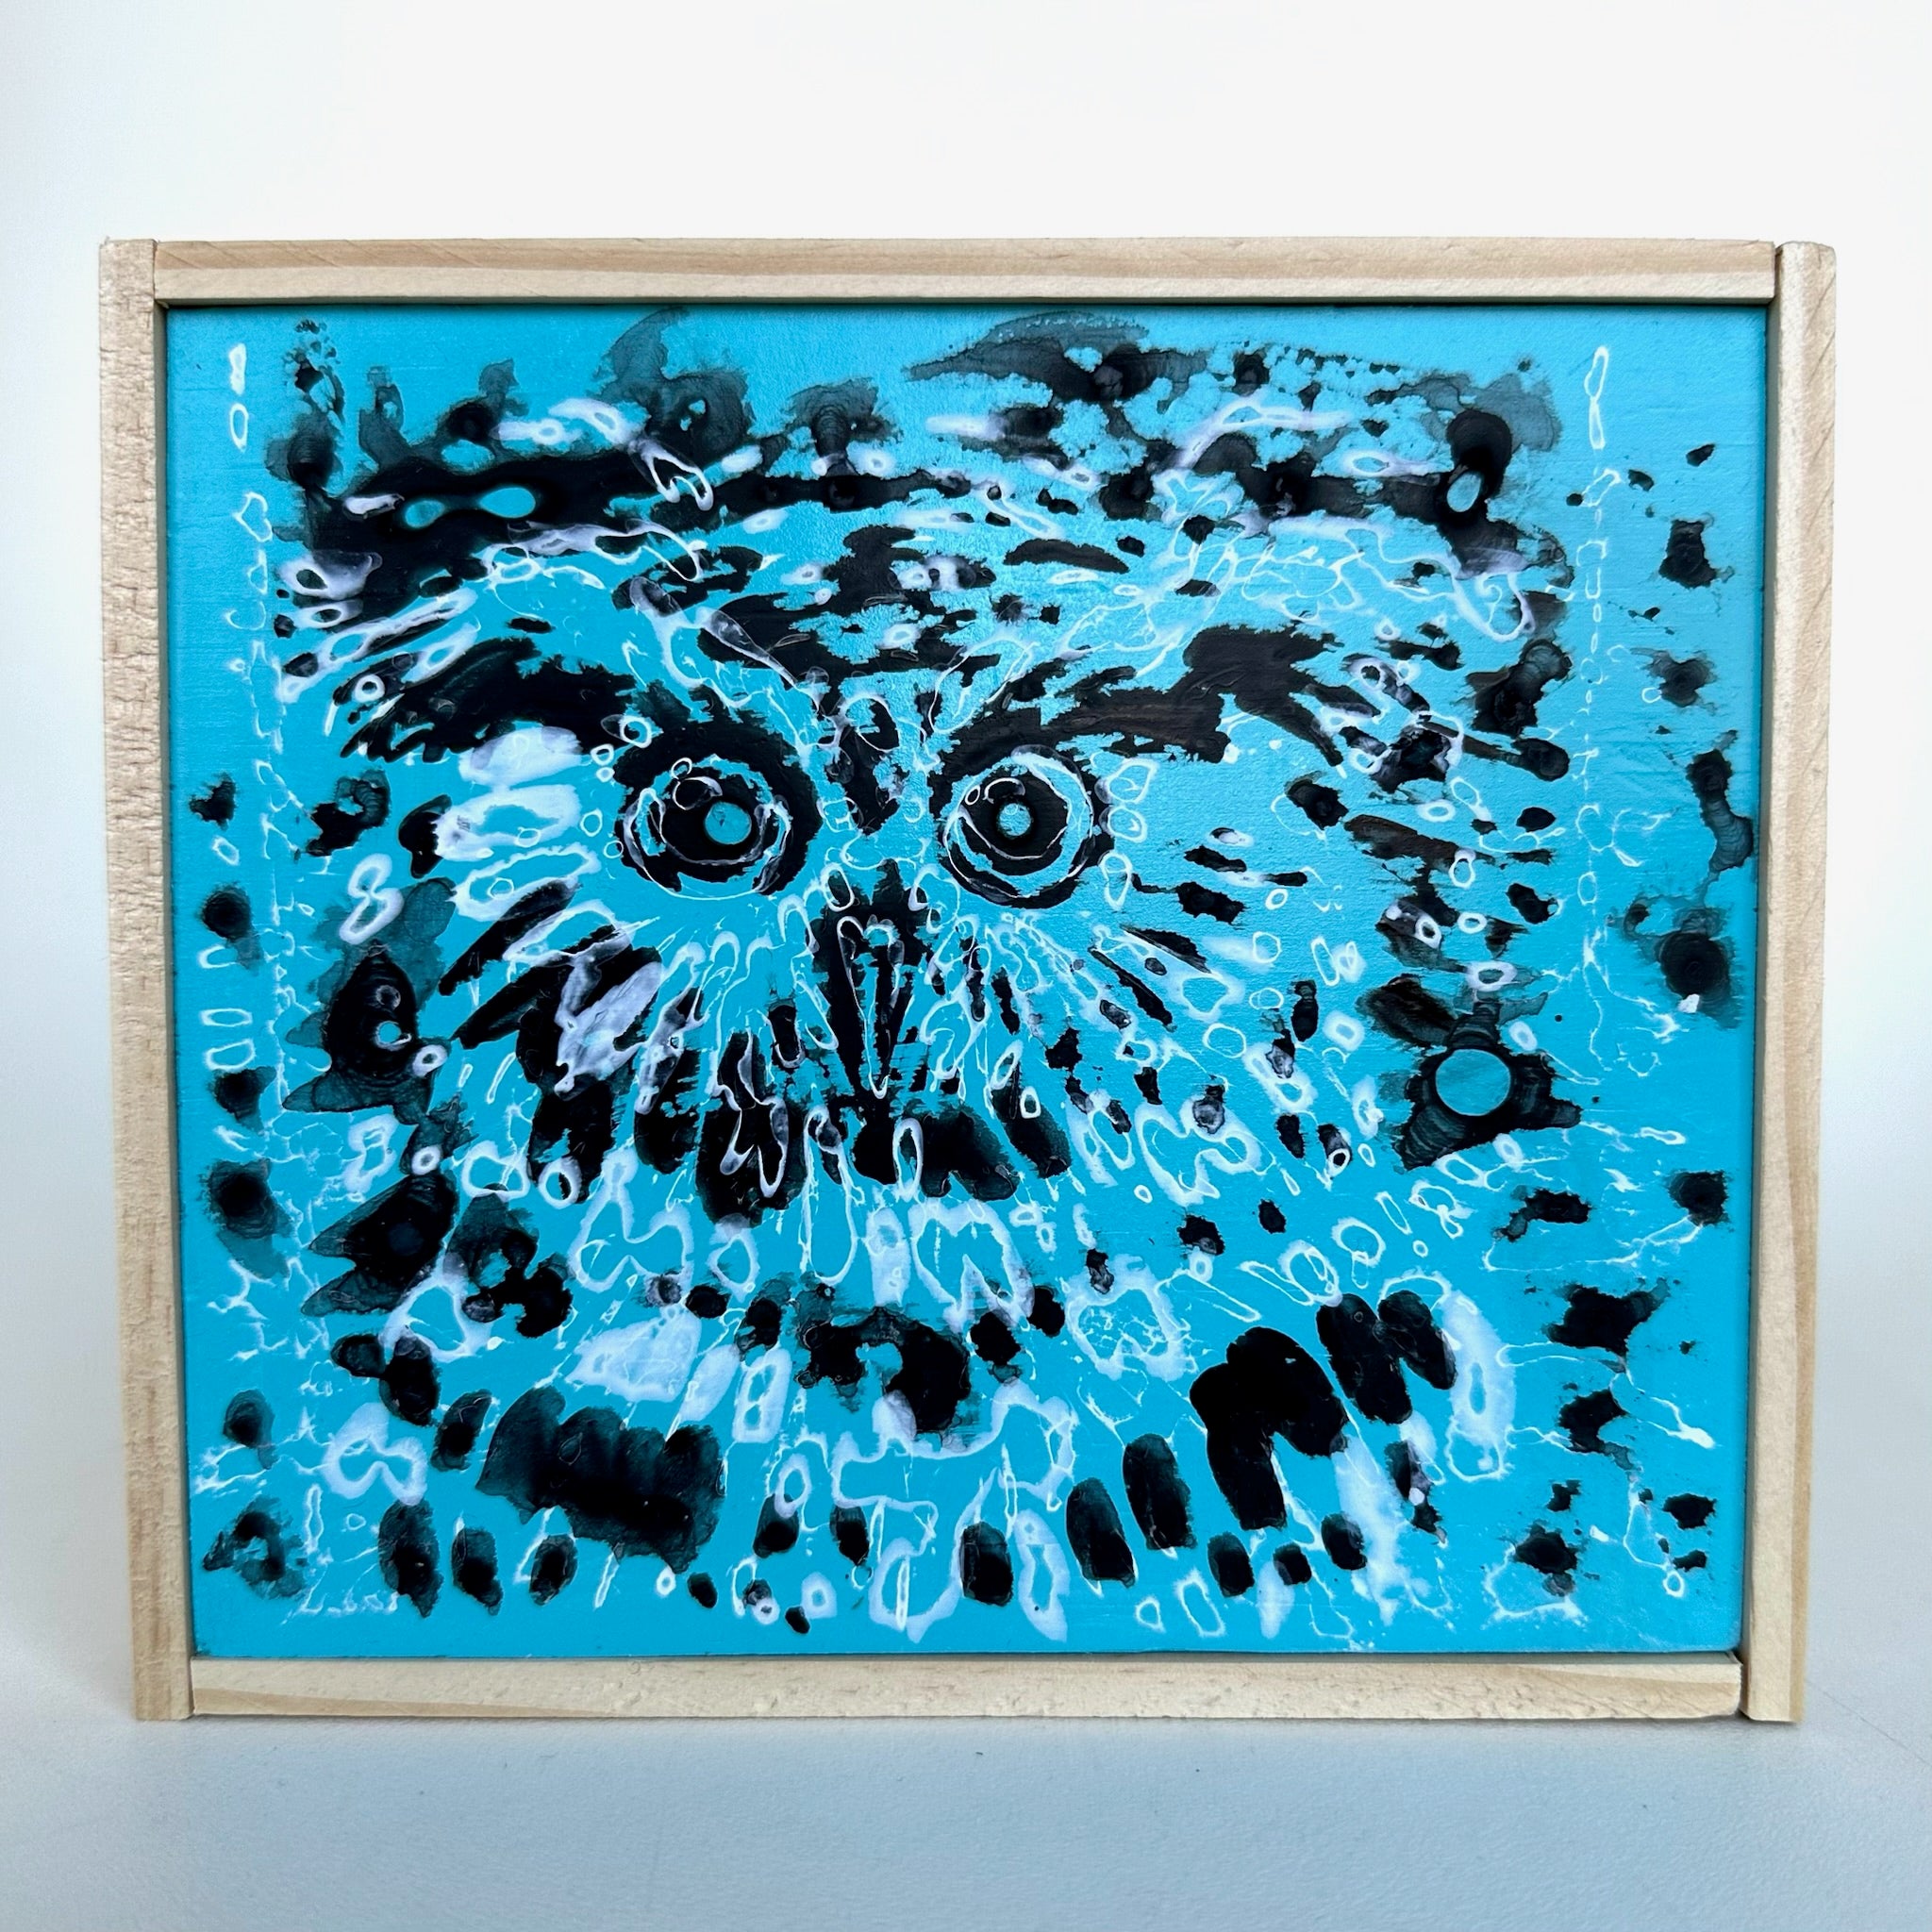 Mike Kasun "great horned owl”